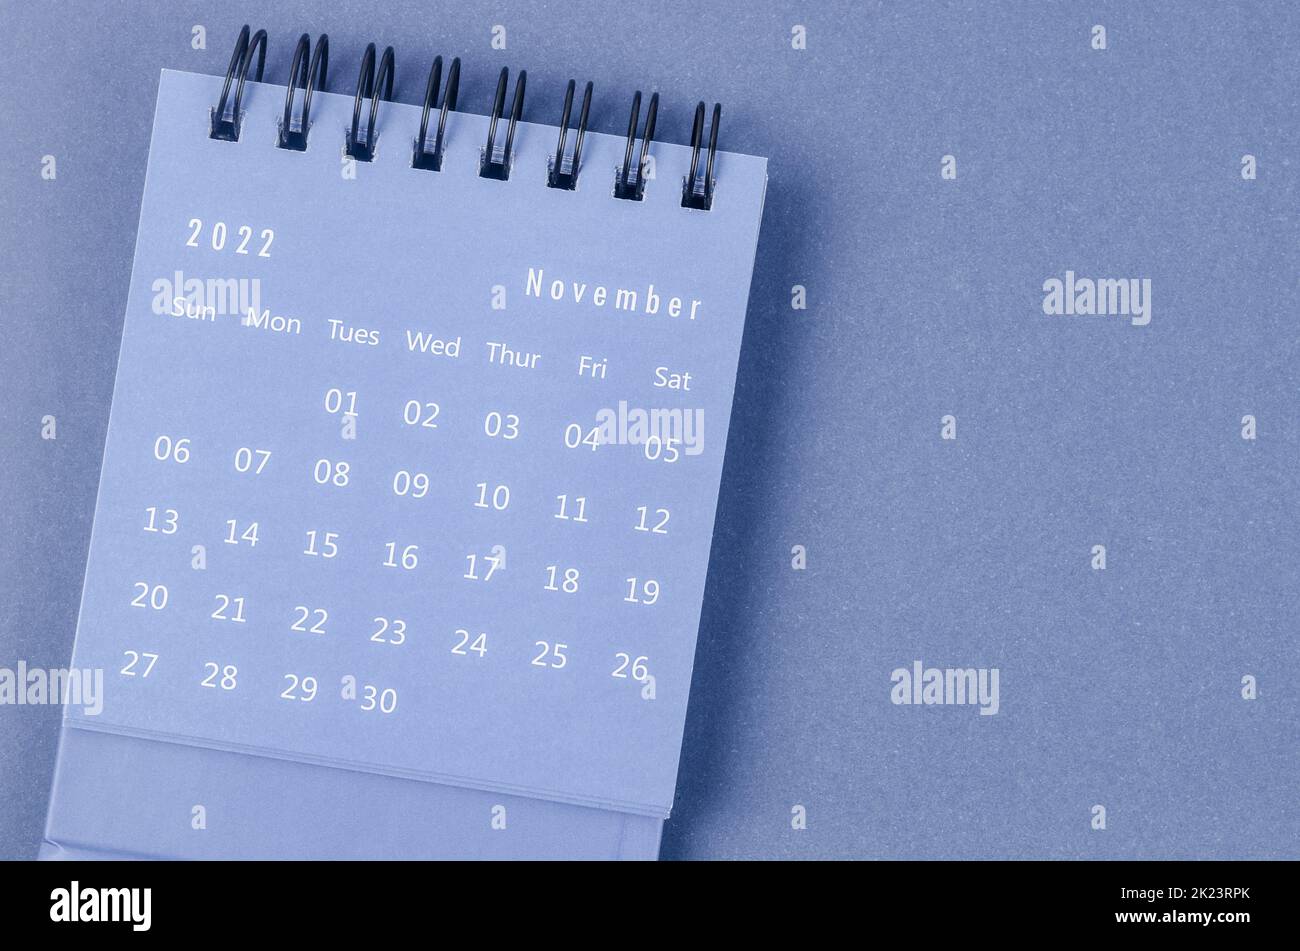 November 2022 Monthly desk calendar for 2022 year on blue background. Stock Photo